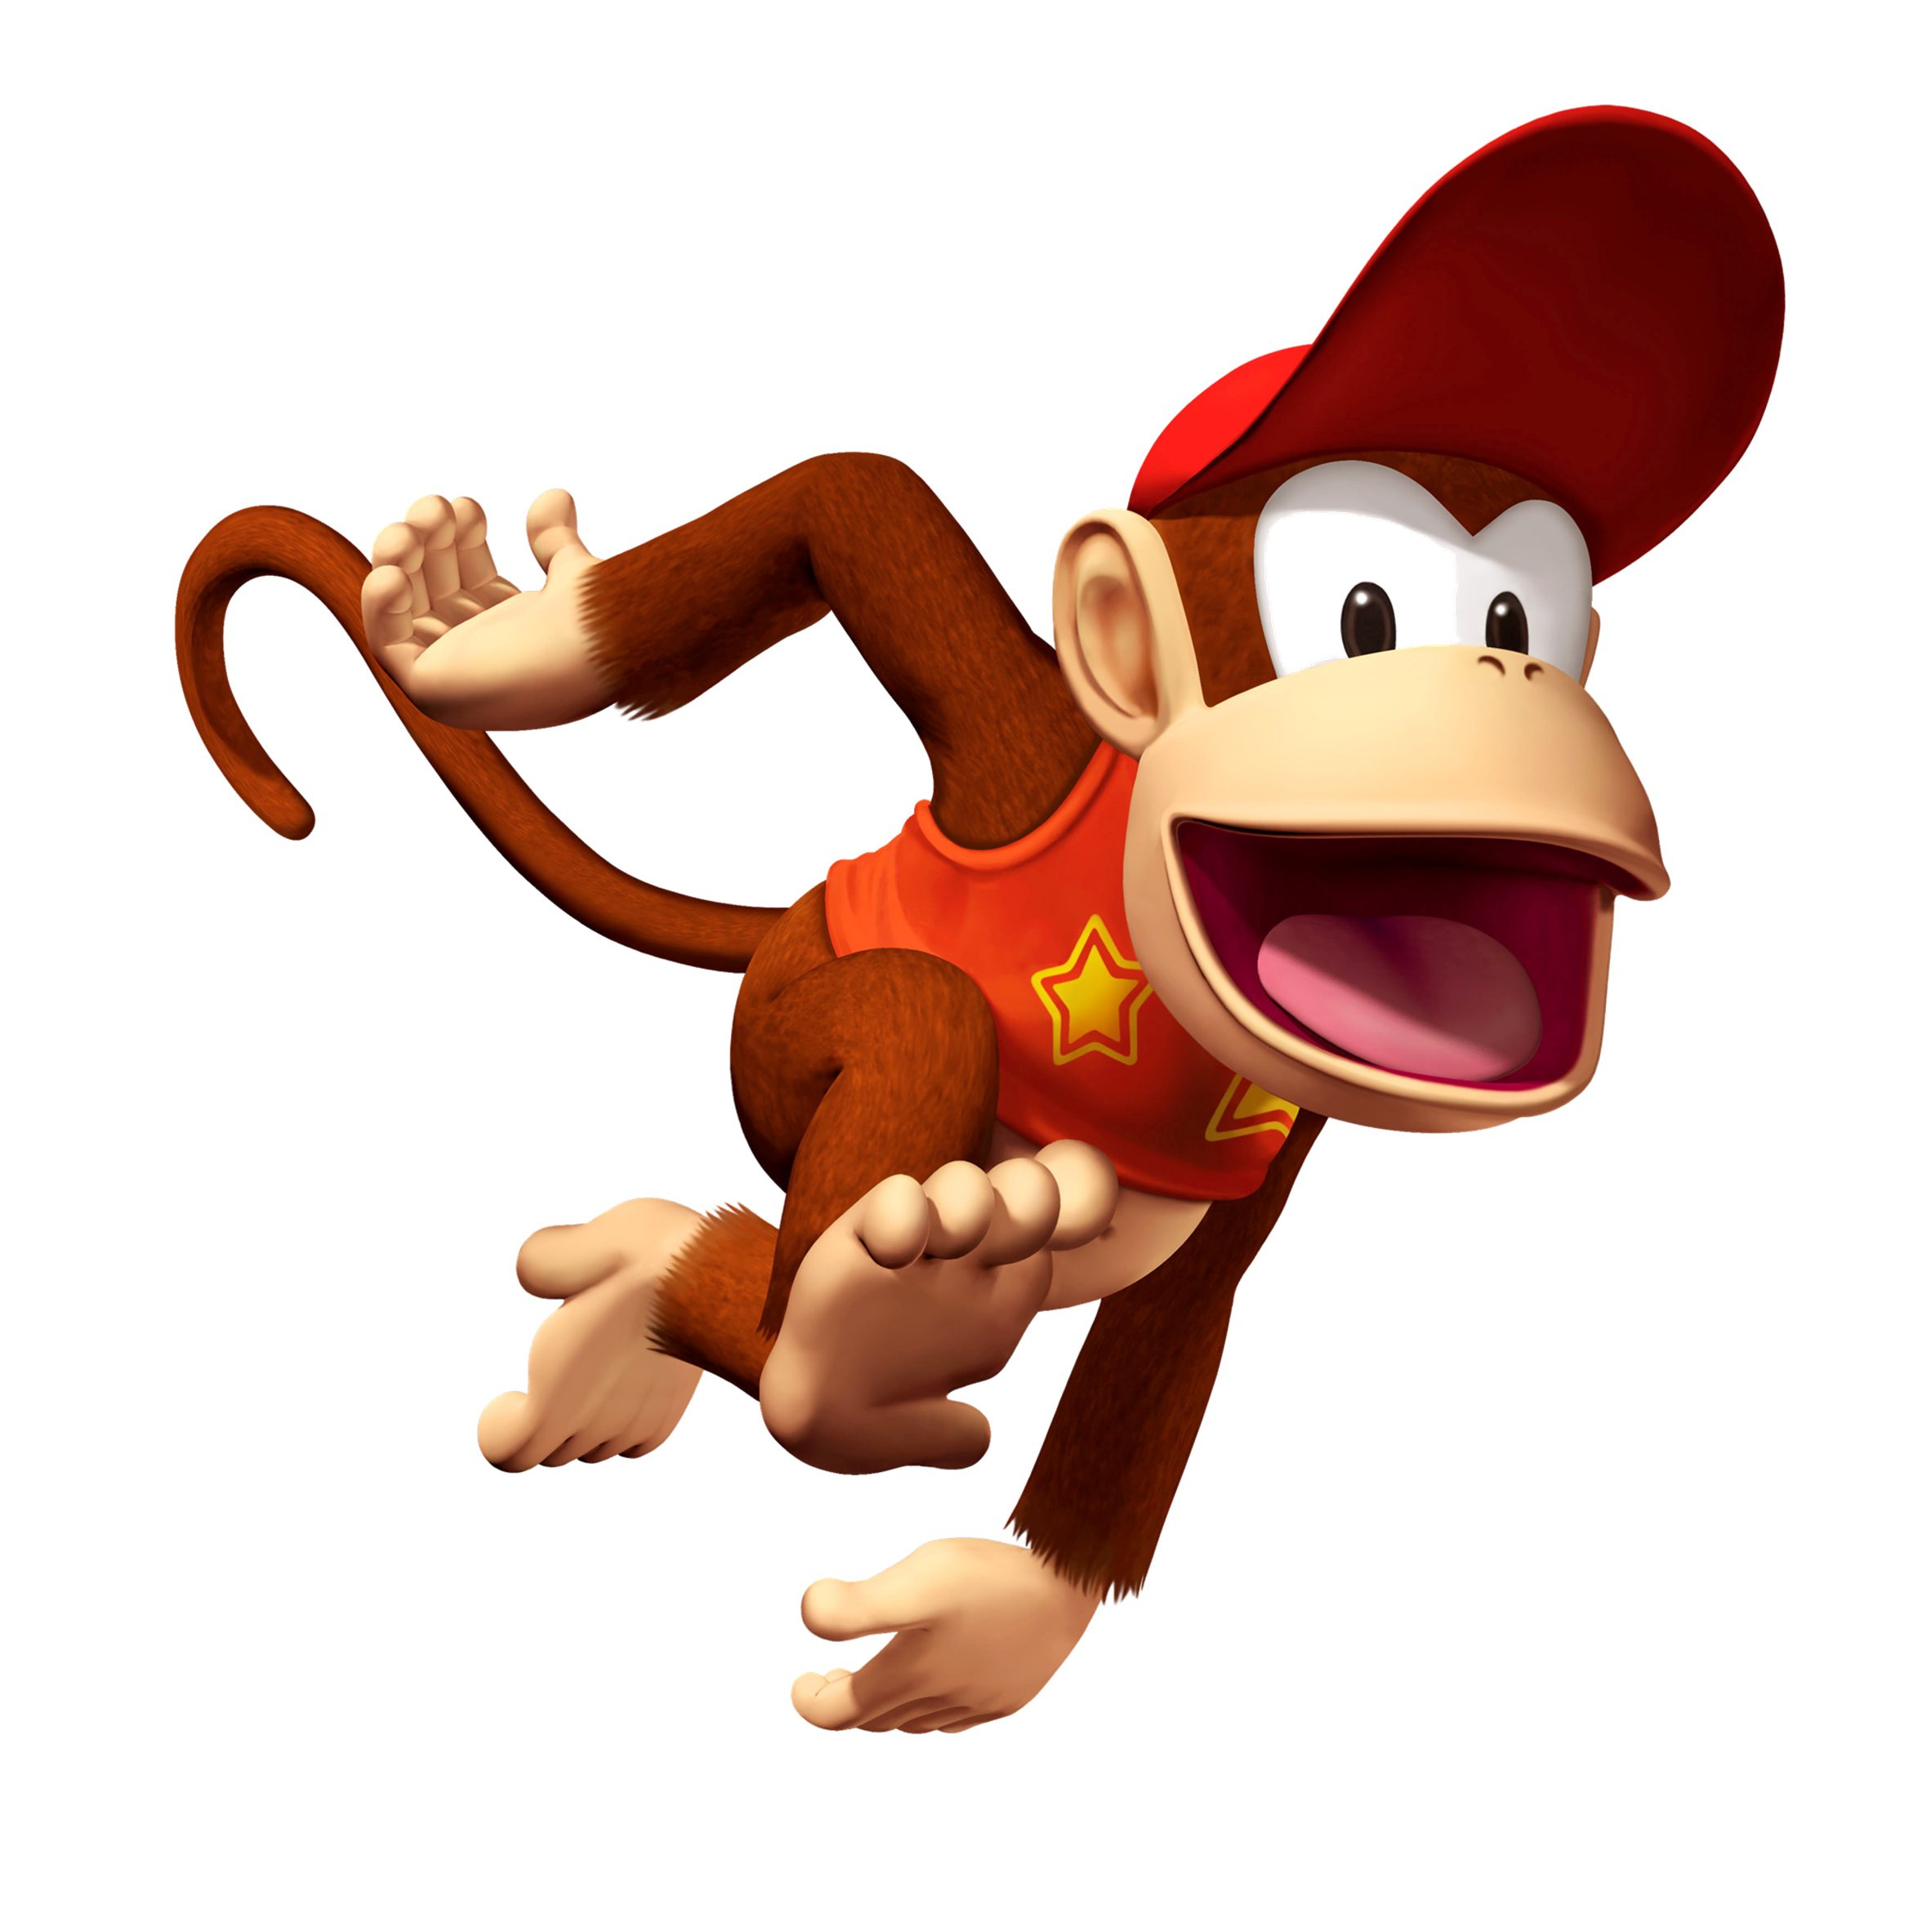 Donkey Kong PNG High Quality Image